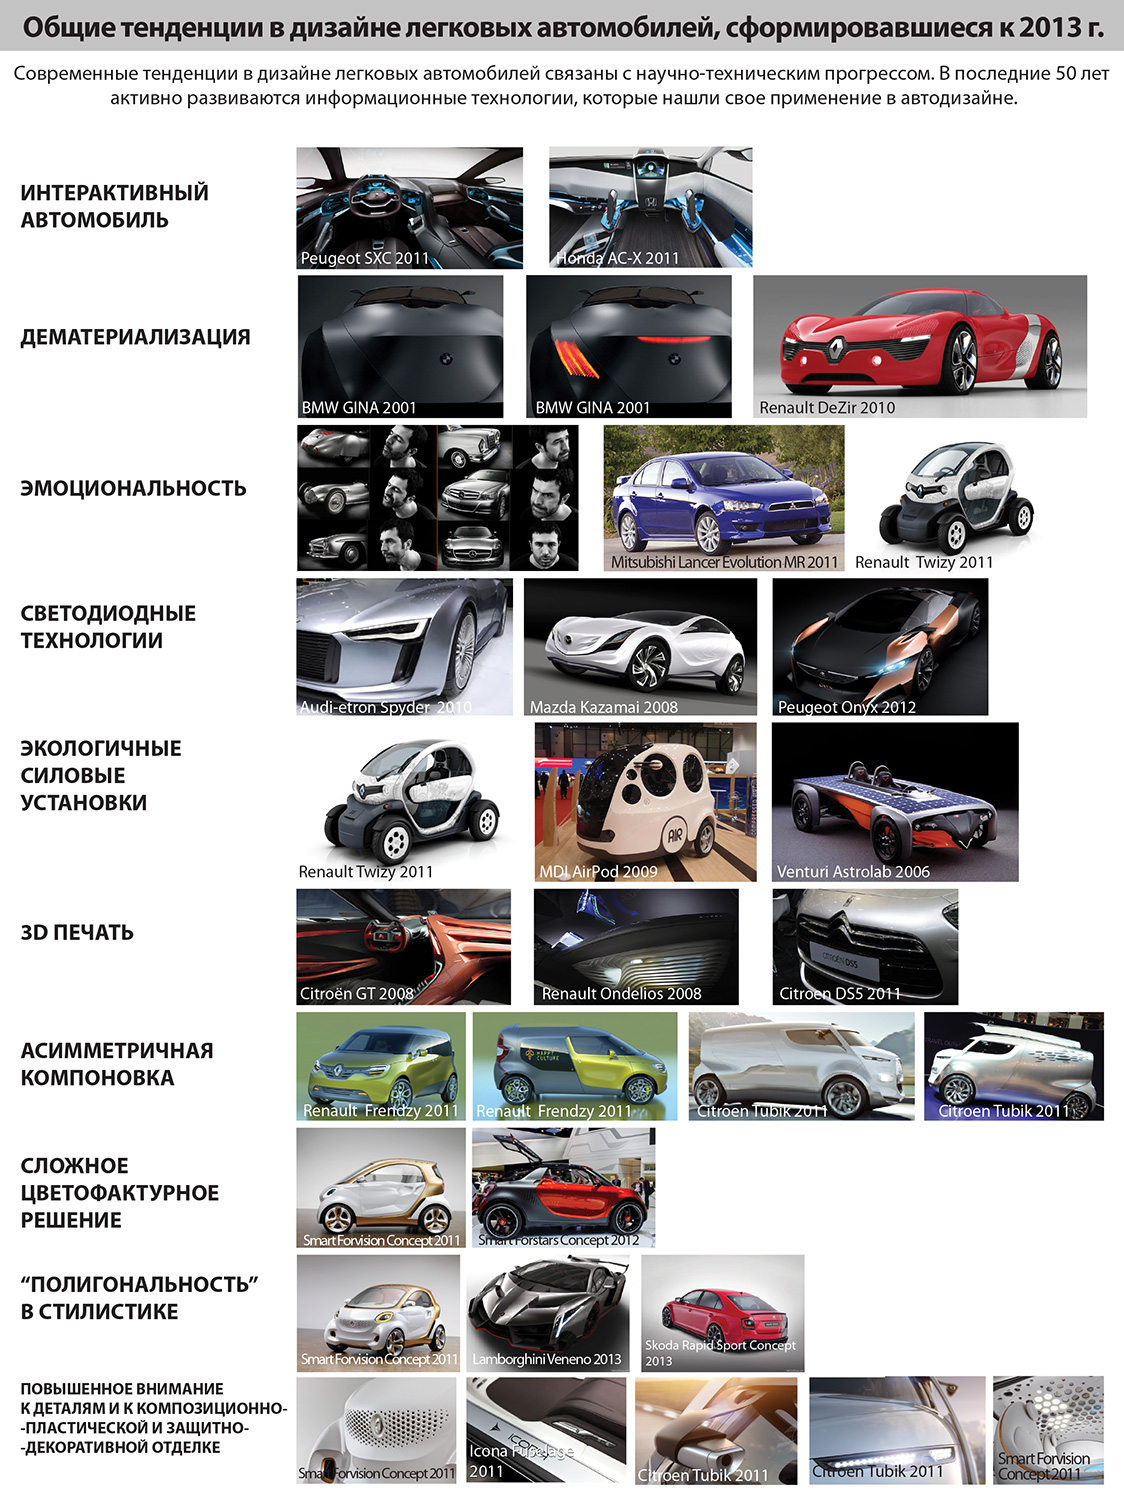 trends-on-2013-01 rus.jpg